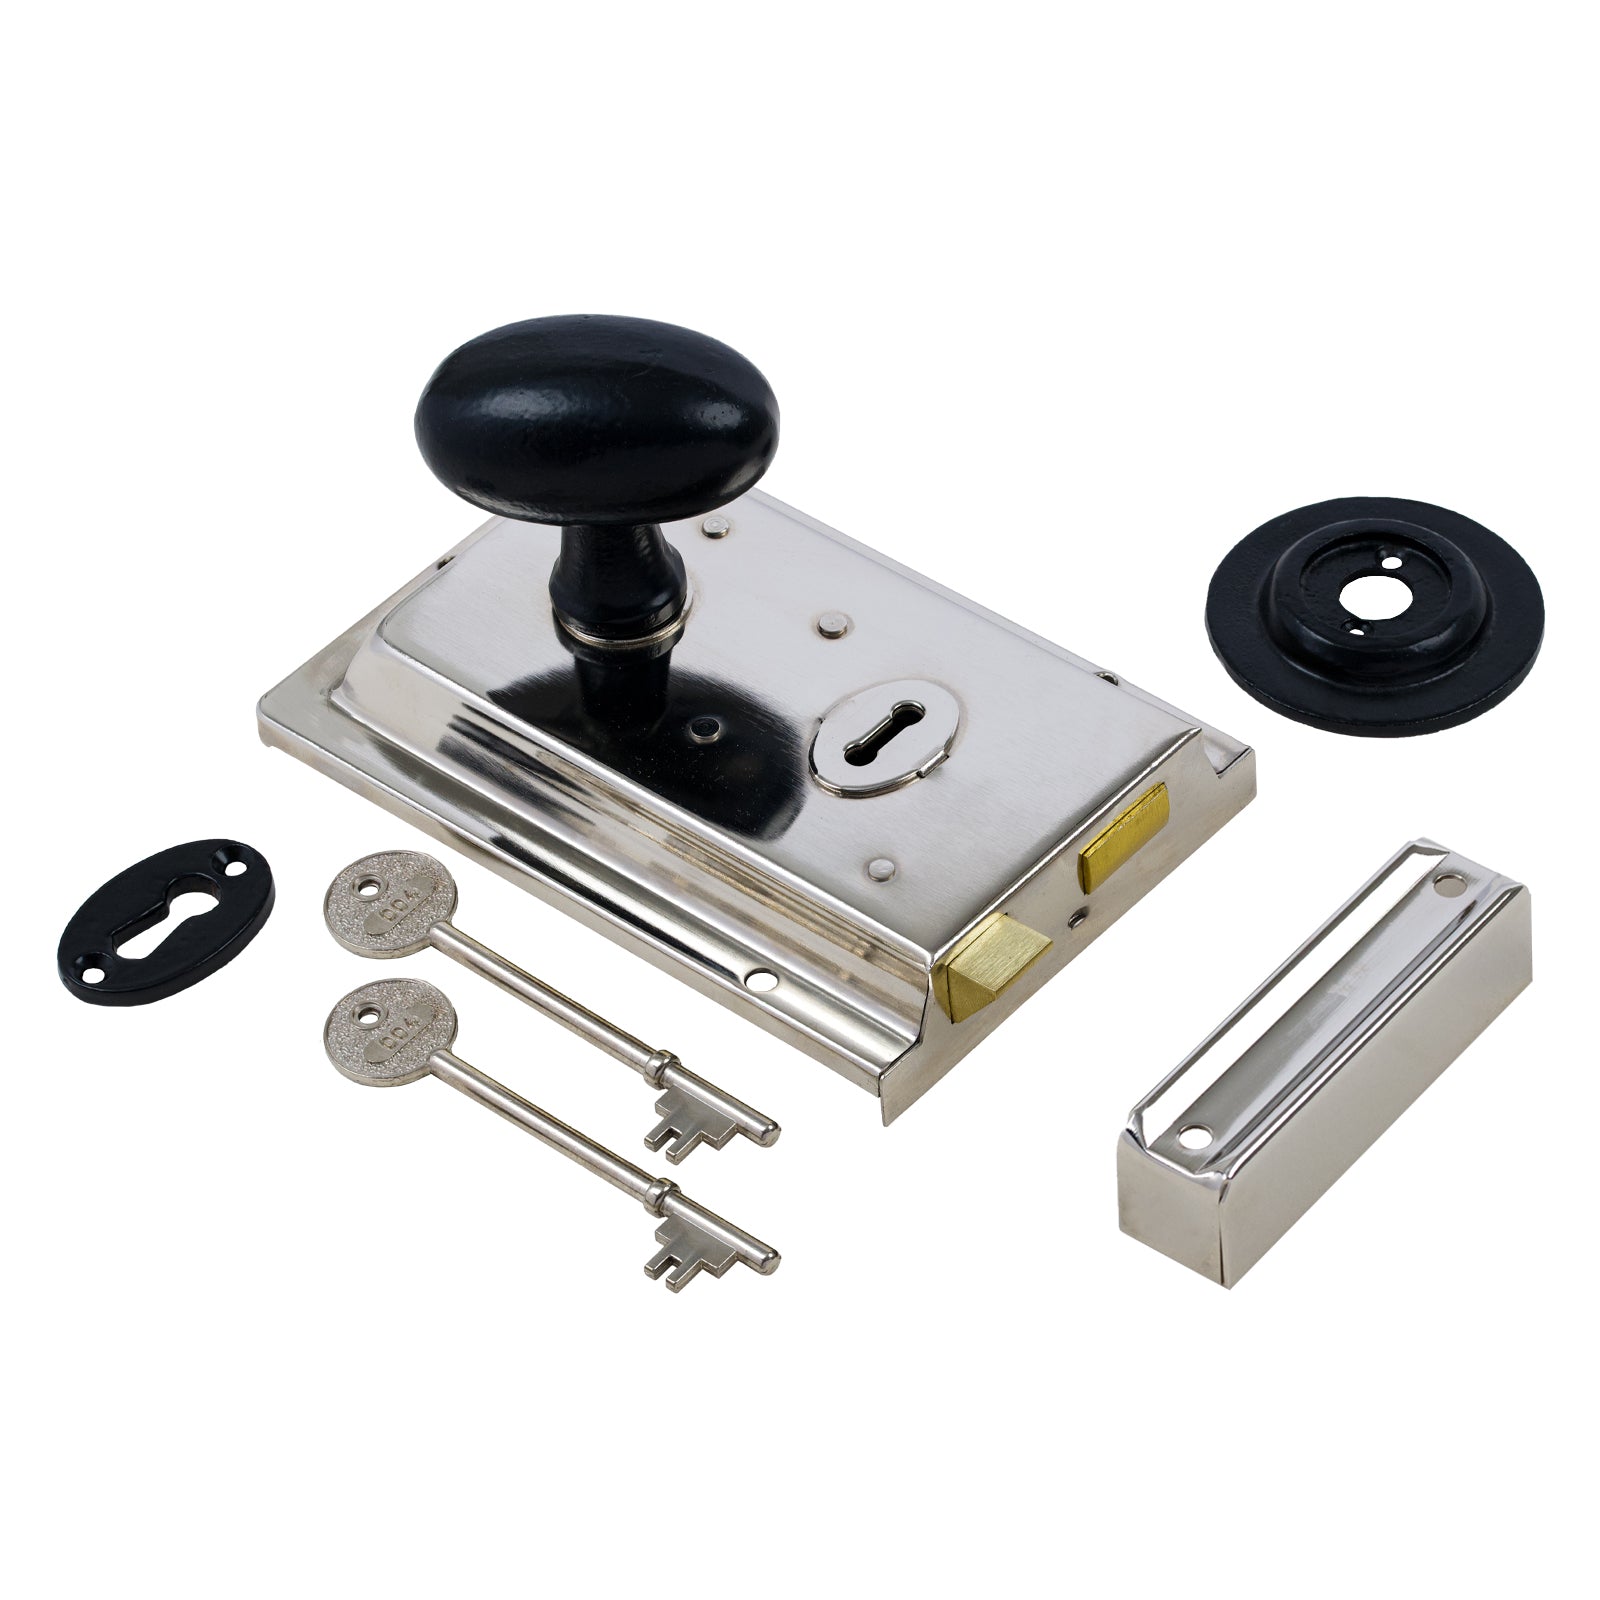 SHOW Oval Door Knob Set - Black On Polished Nickel Rim Lock